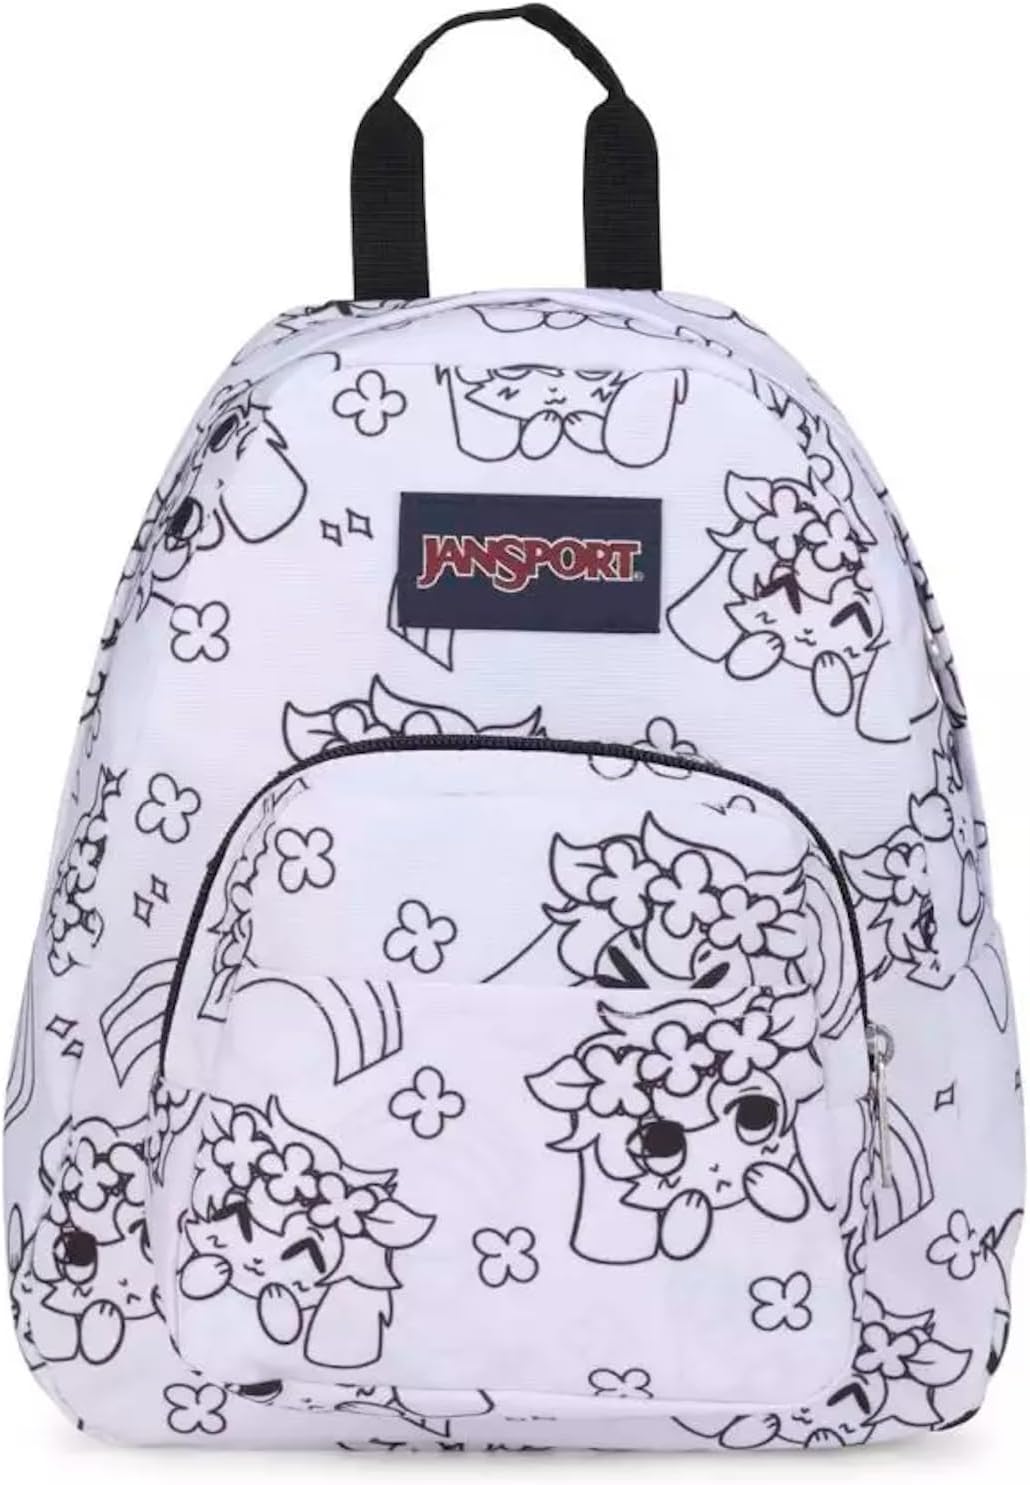 Jansport HALF Pint Mini Backpack Anime Emotions